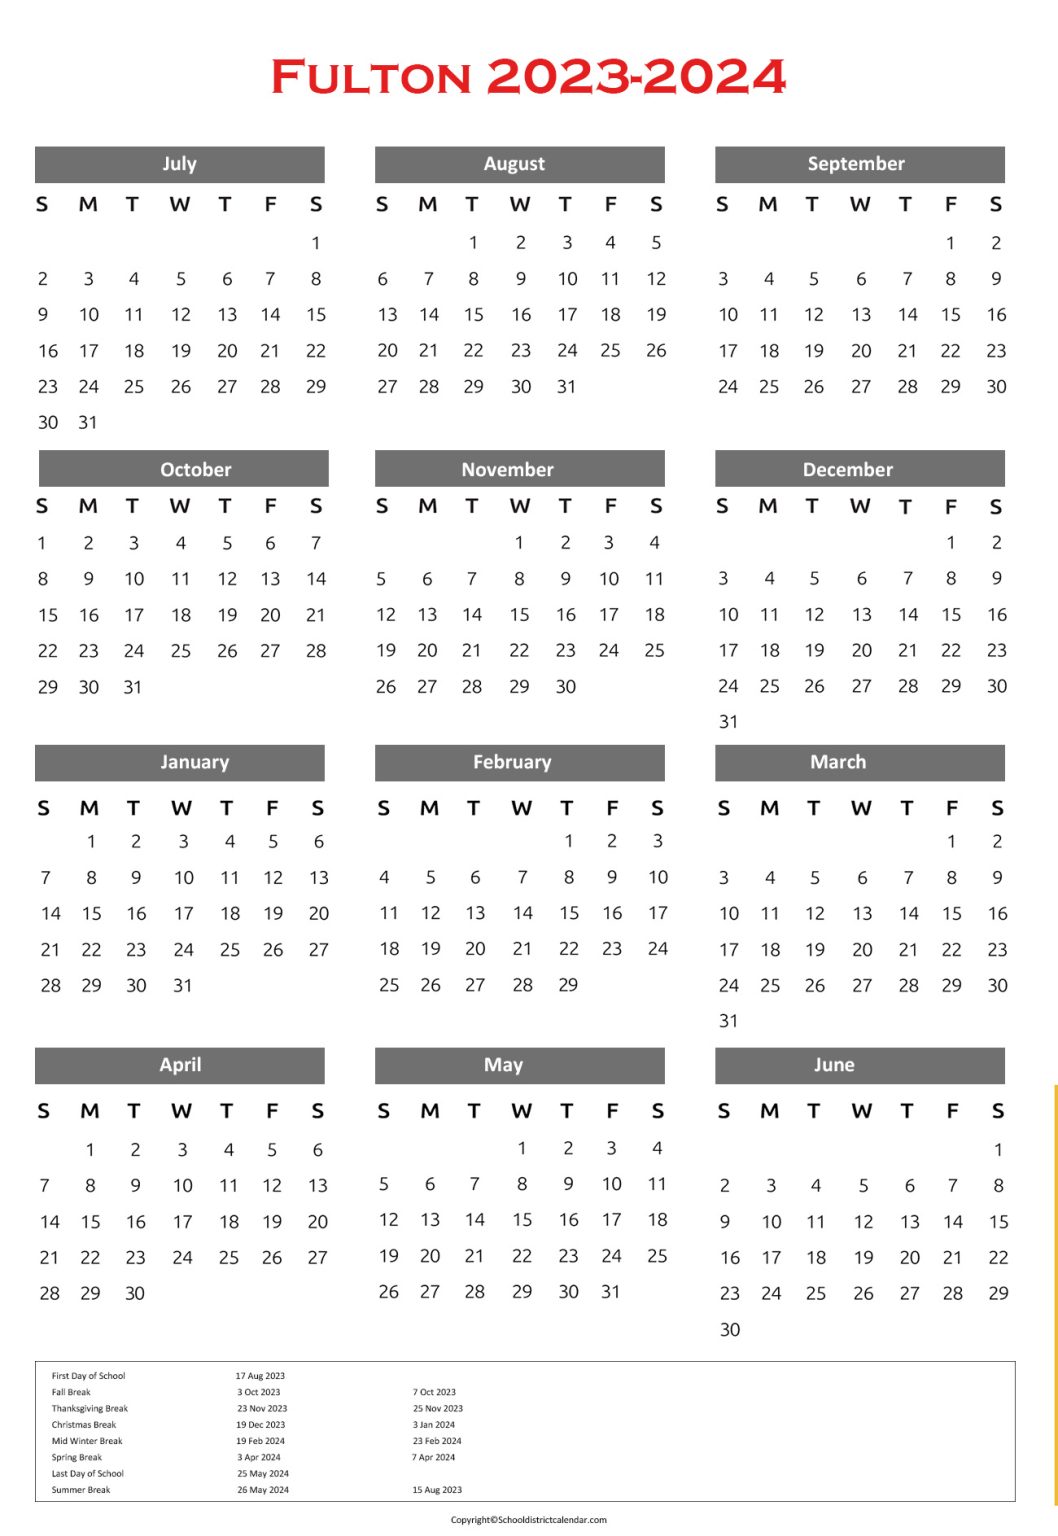 Fulton County Schools Calendar Holidays 20232024